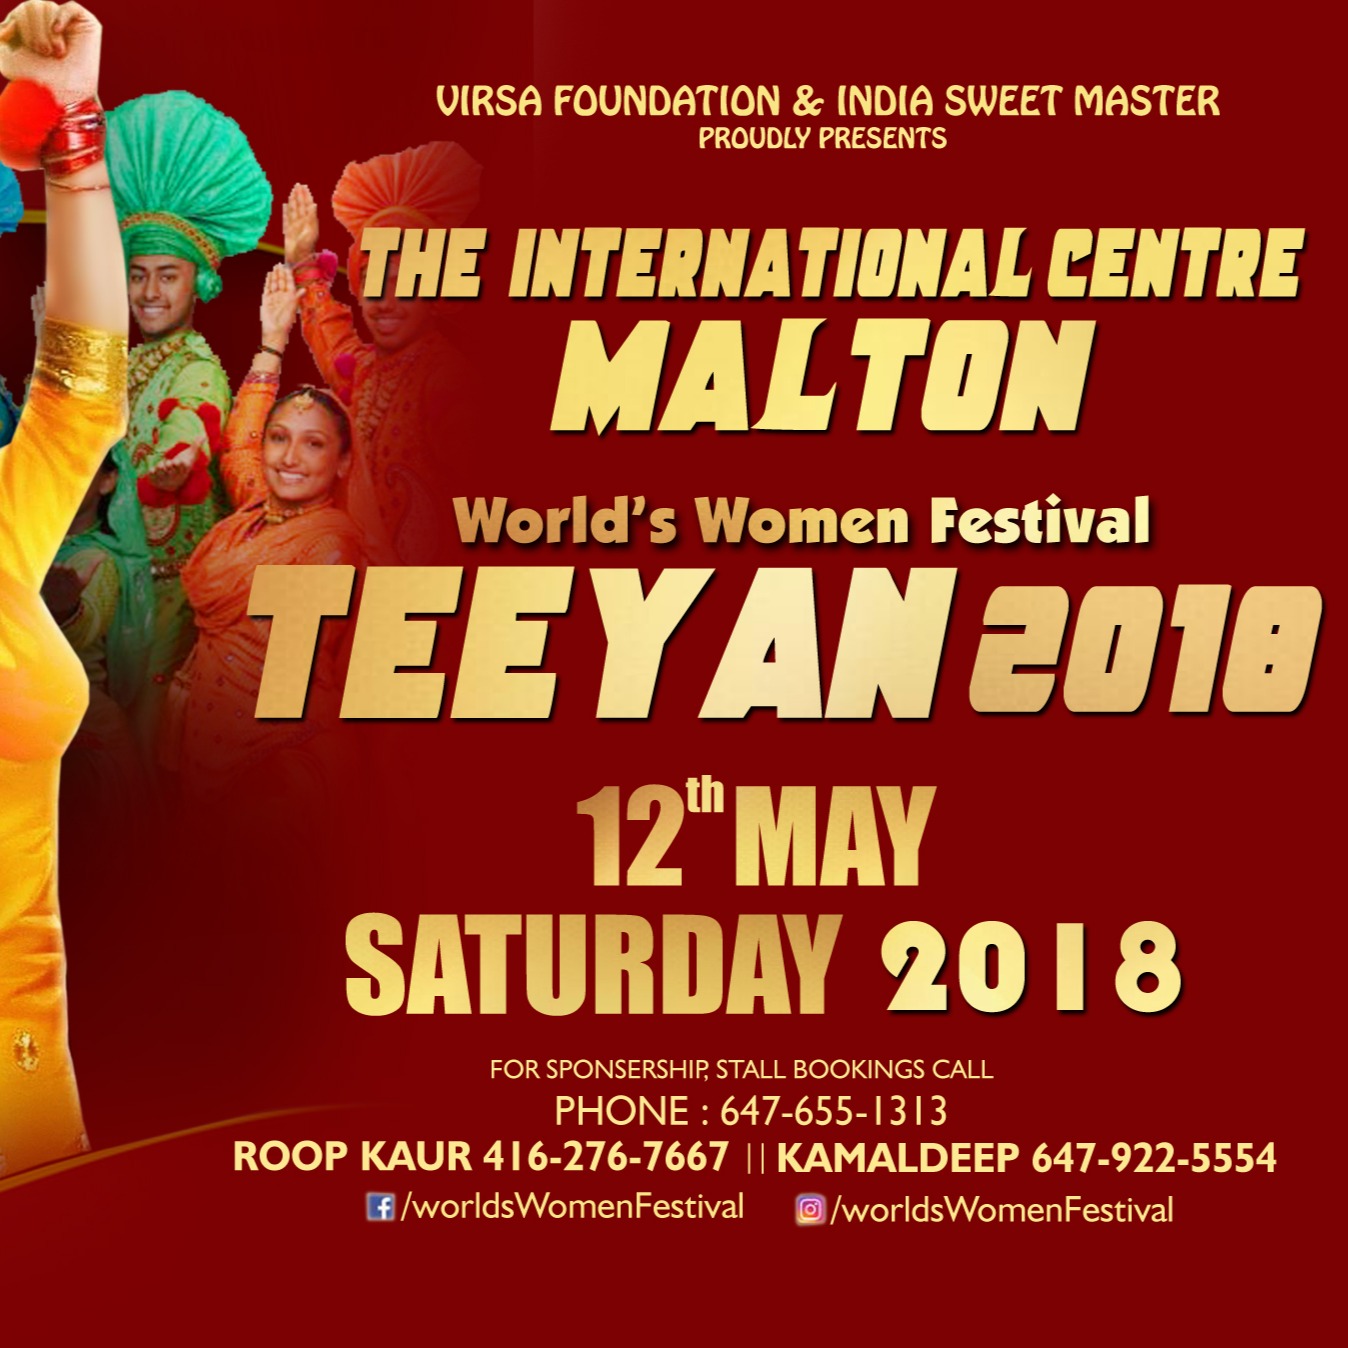 World's Women Festival Teeyan 2018 